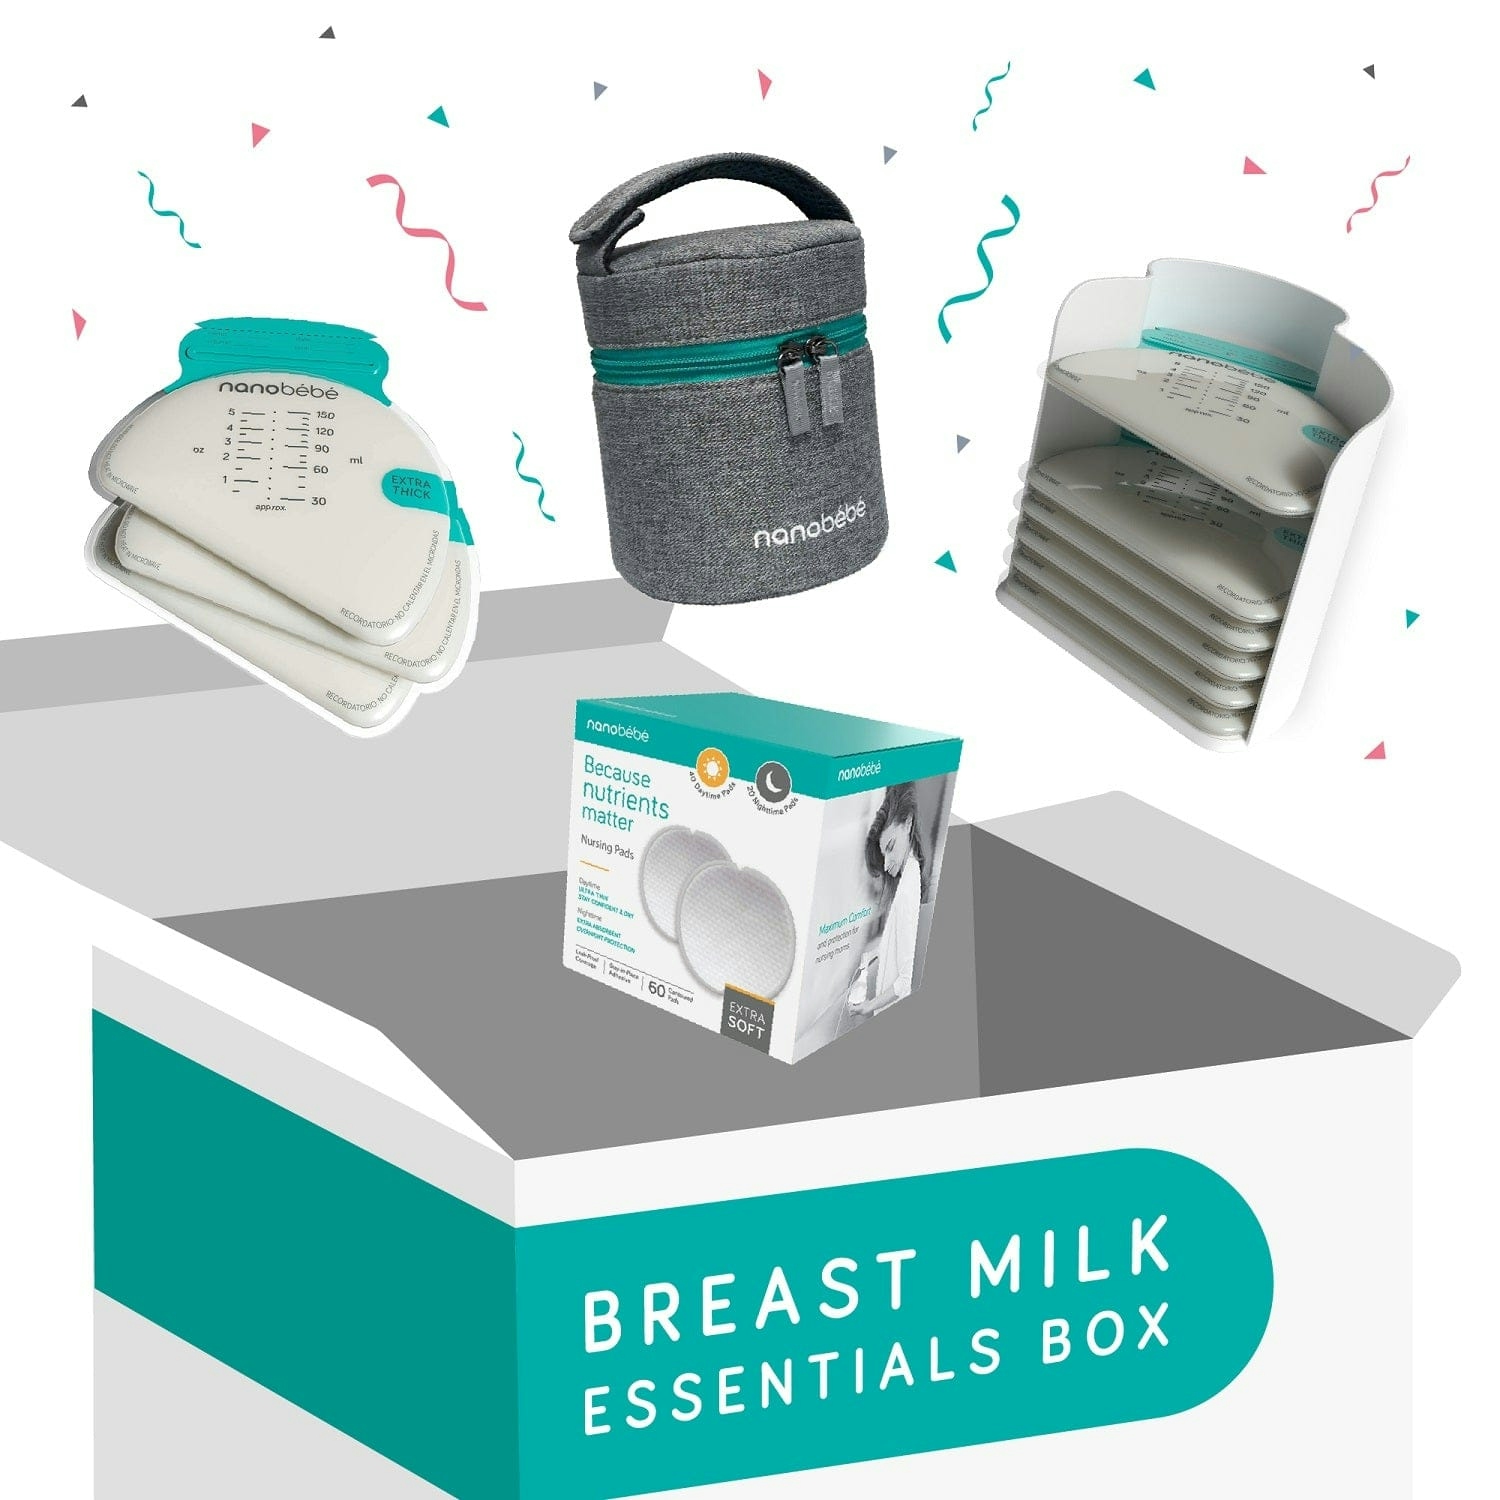 Breast Milk Essentials Box